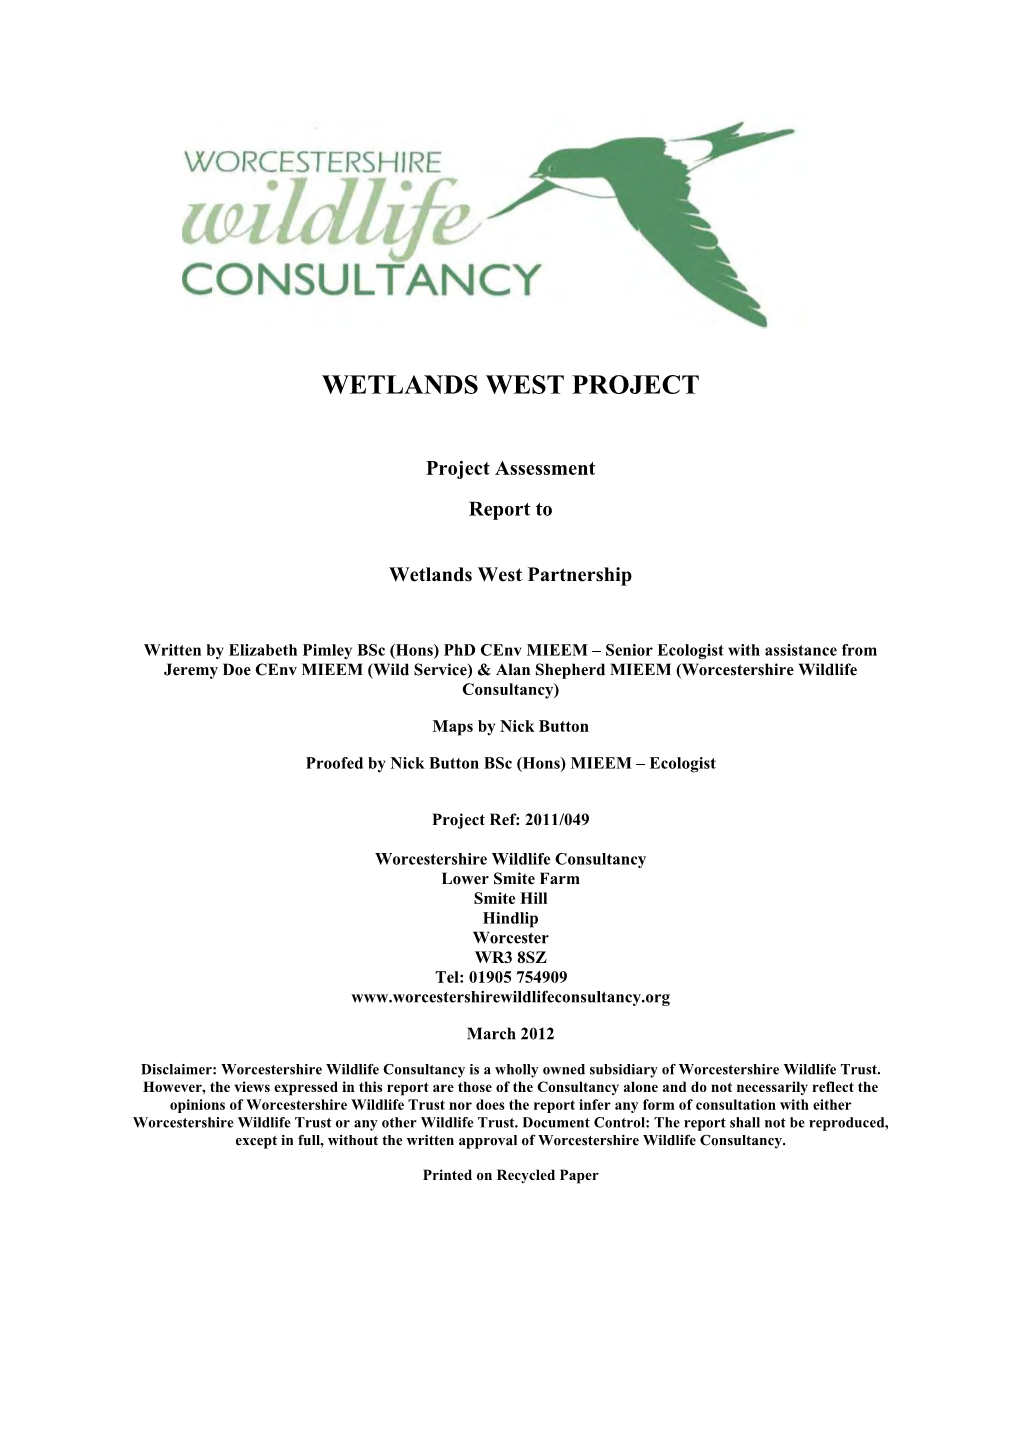 Wetlands West Partnership